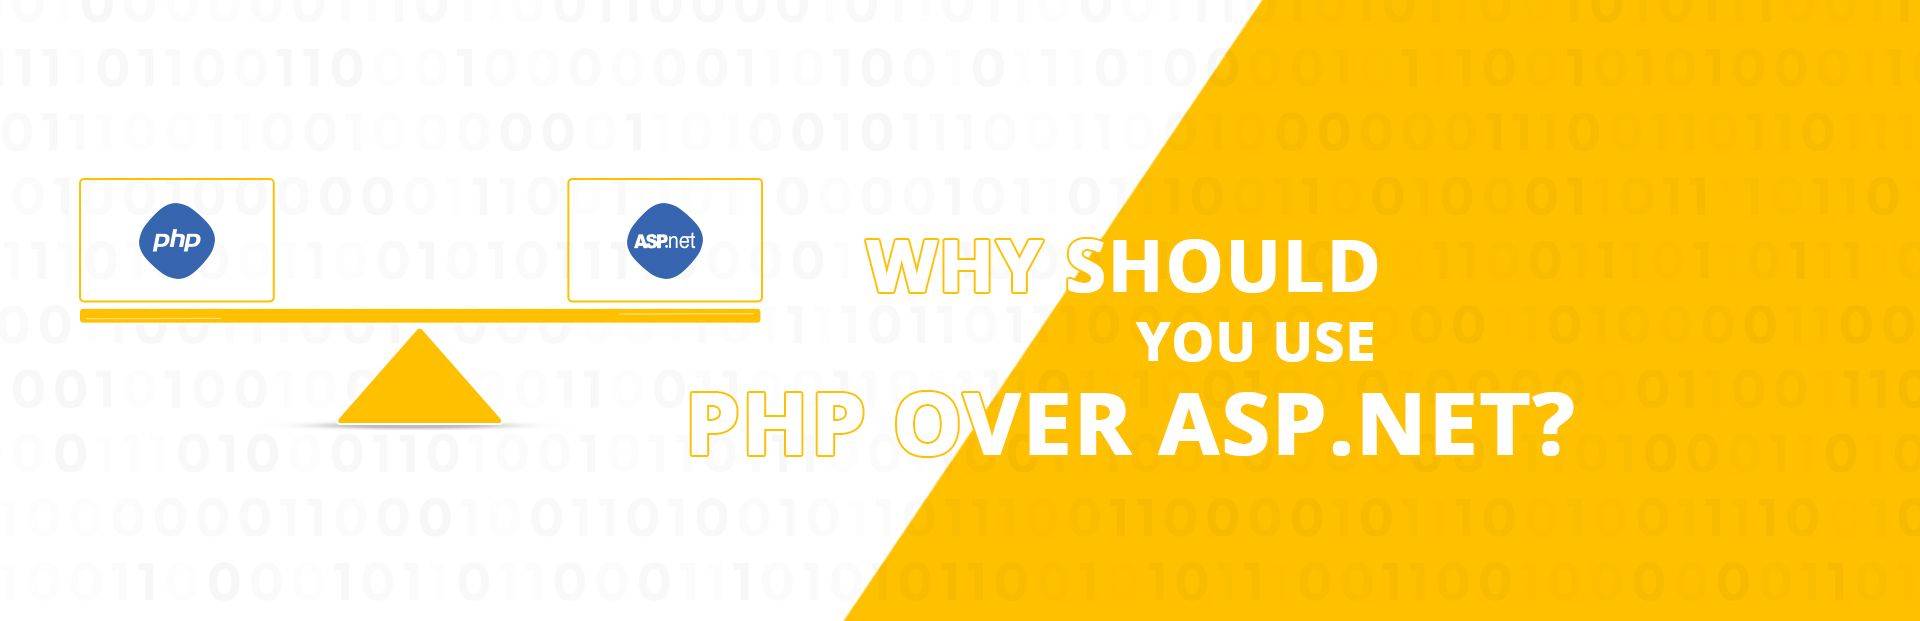 PHP vs ASP.NET